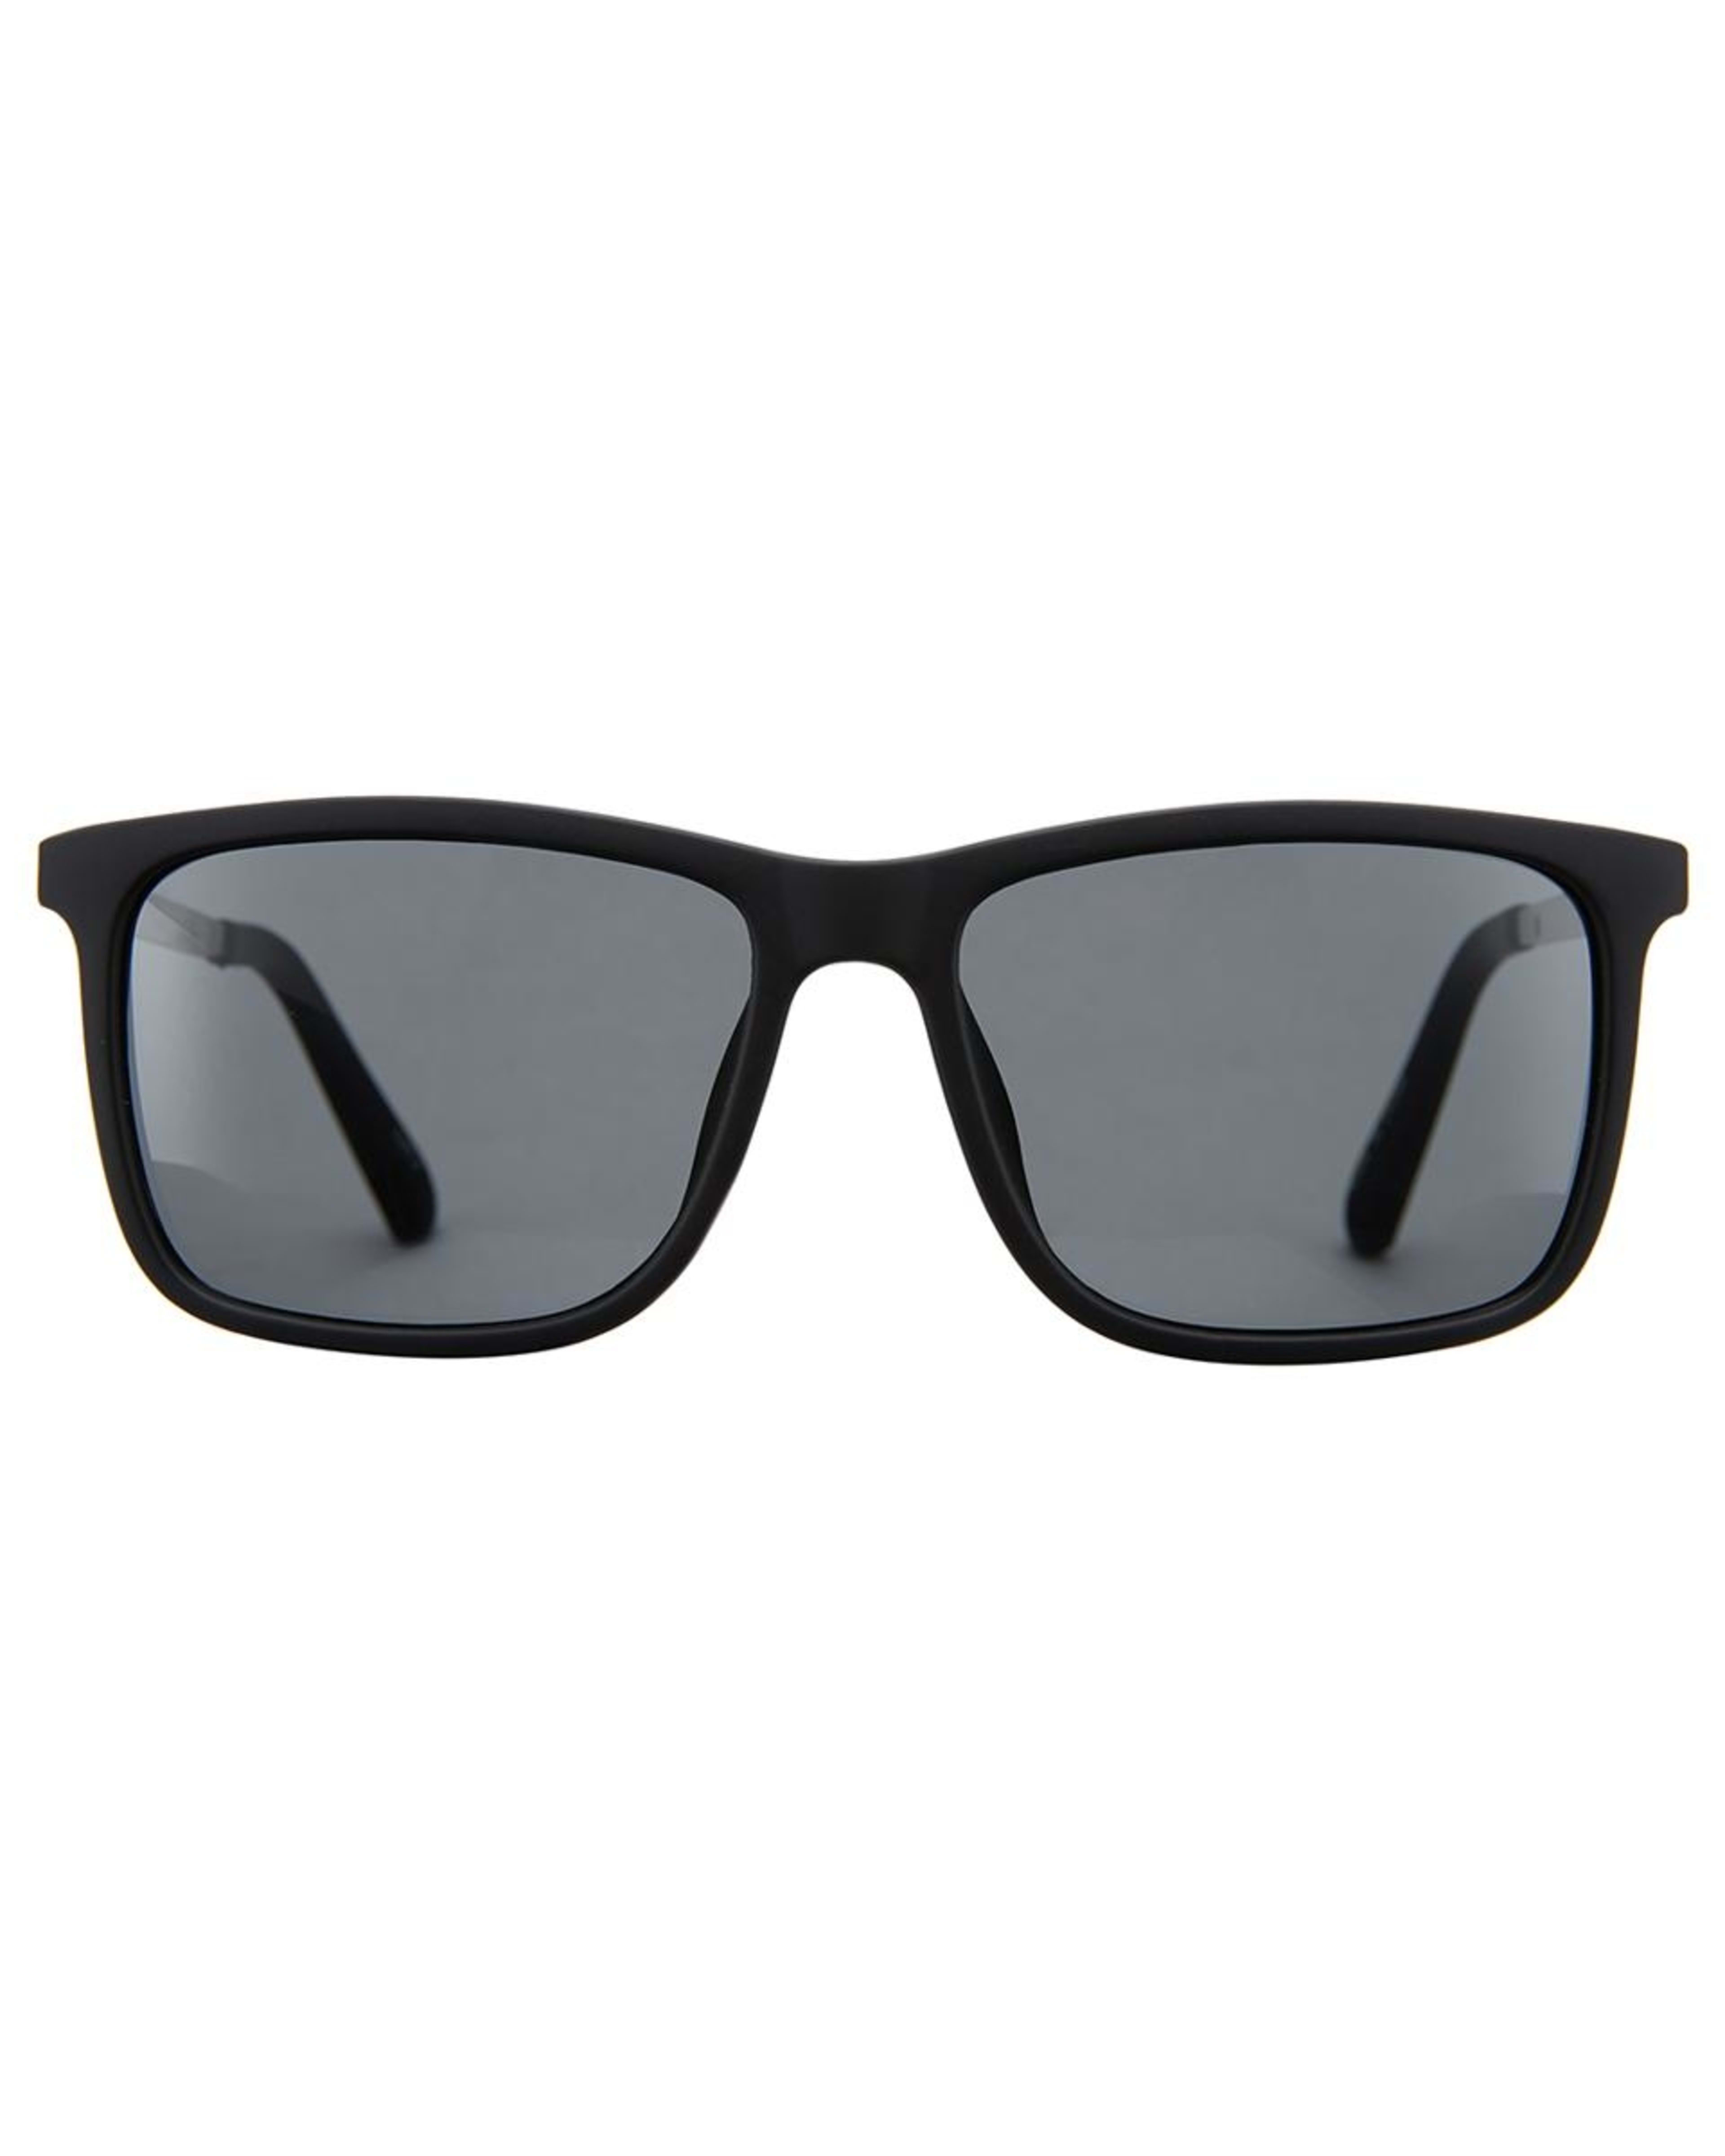 Mens Square Frame Sunglasses - Kmart